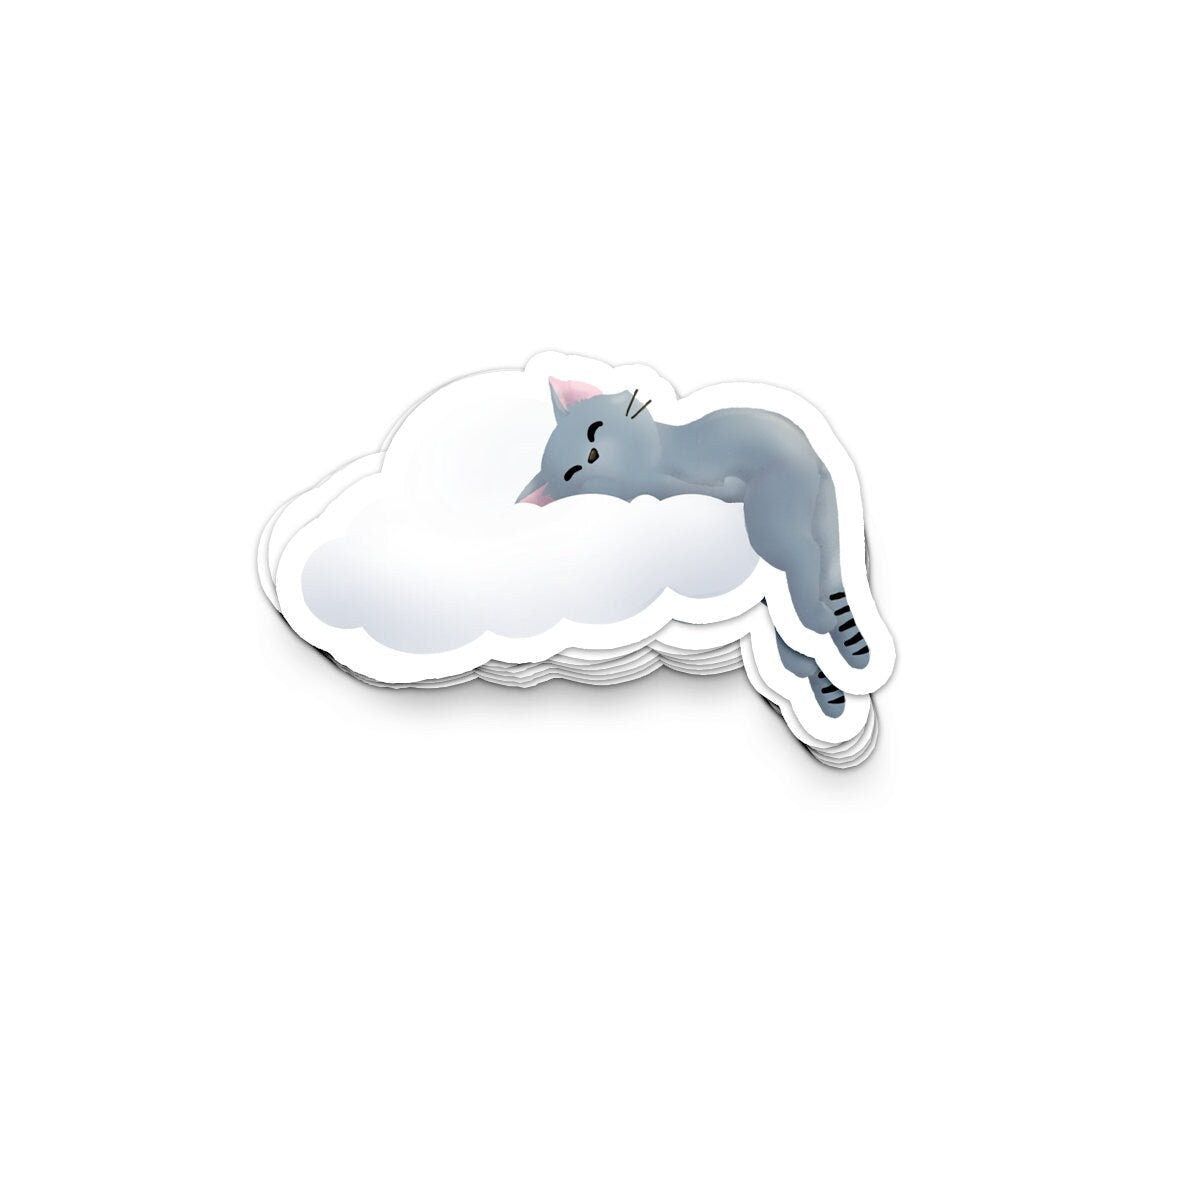 Sleeping Kitties - Grey Kitty on Cloud (Sherman) - Vinyl Sticker, Stickers, Decorative Stickers